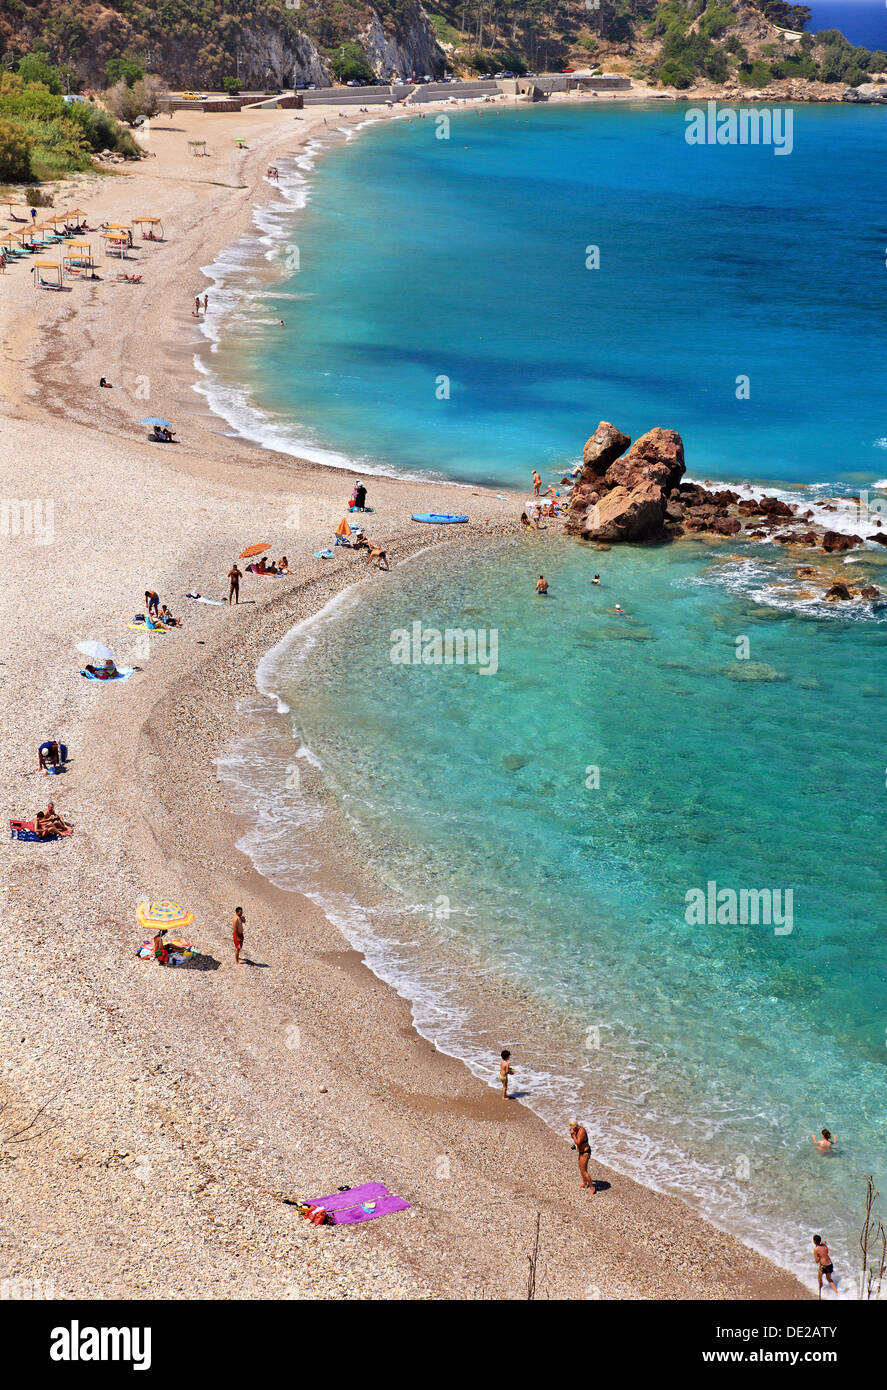 Potami beach, very close to Karlovasi town, Samos island, Aegean sea, Greece. Stock Photo